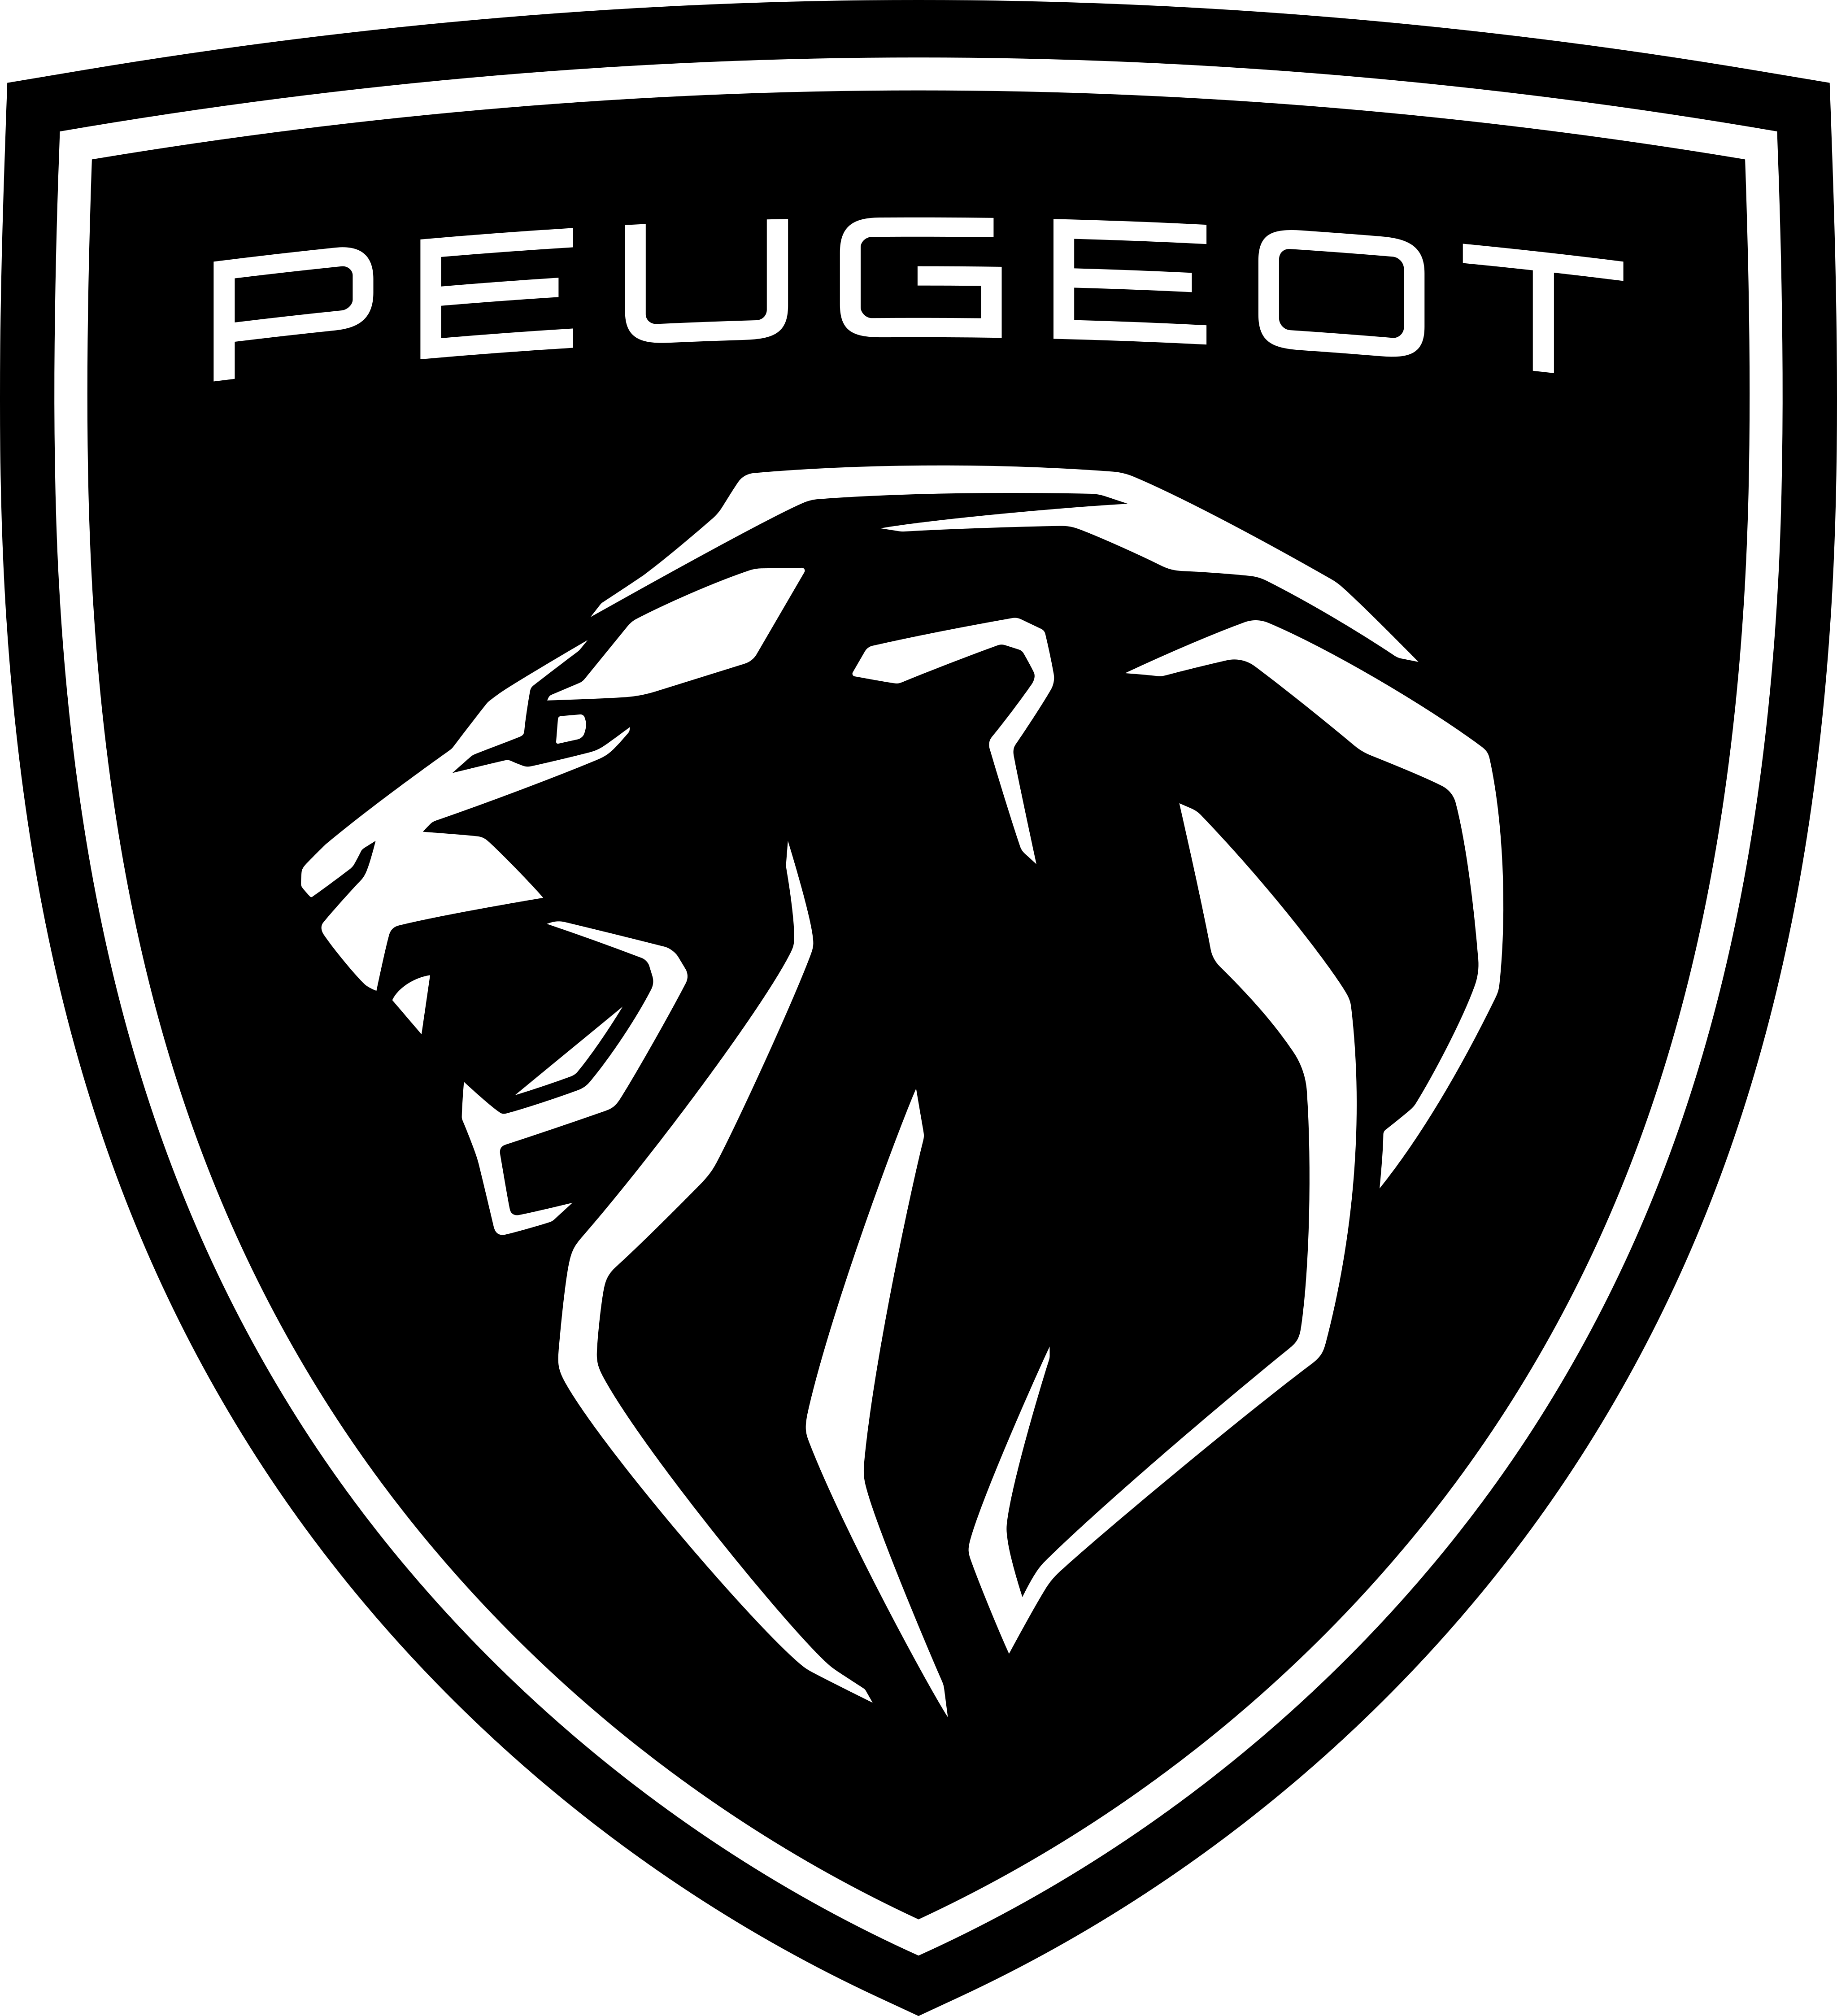 peugeot logo 5 - Peugeot Logo